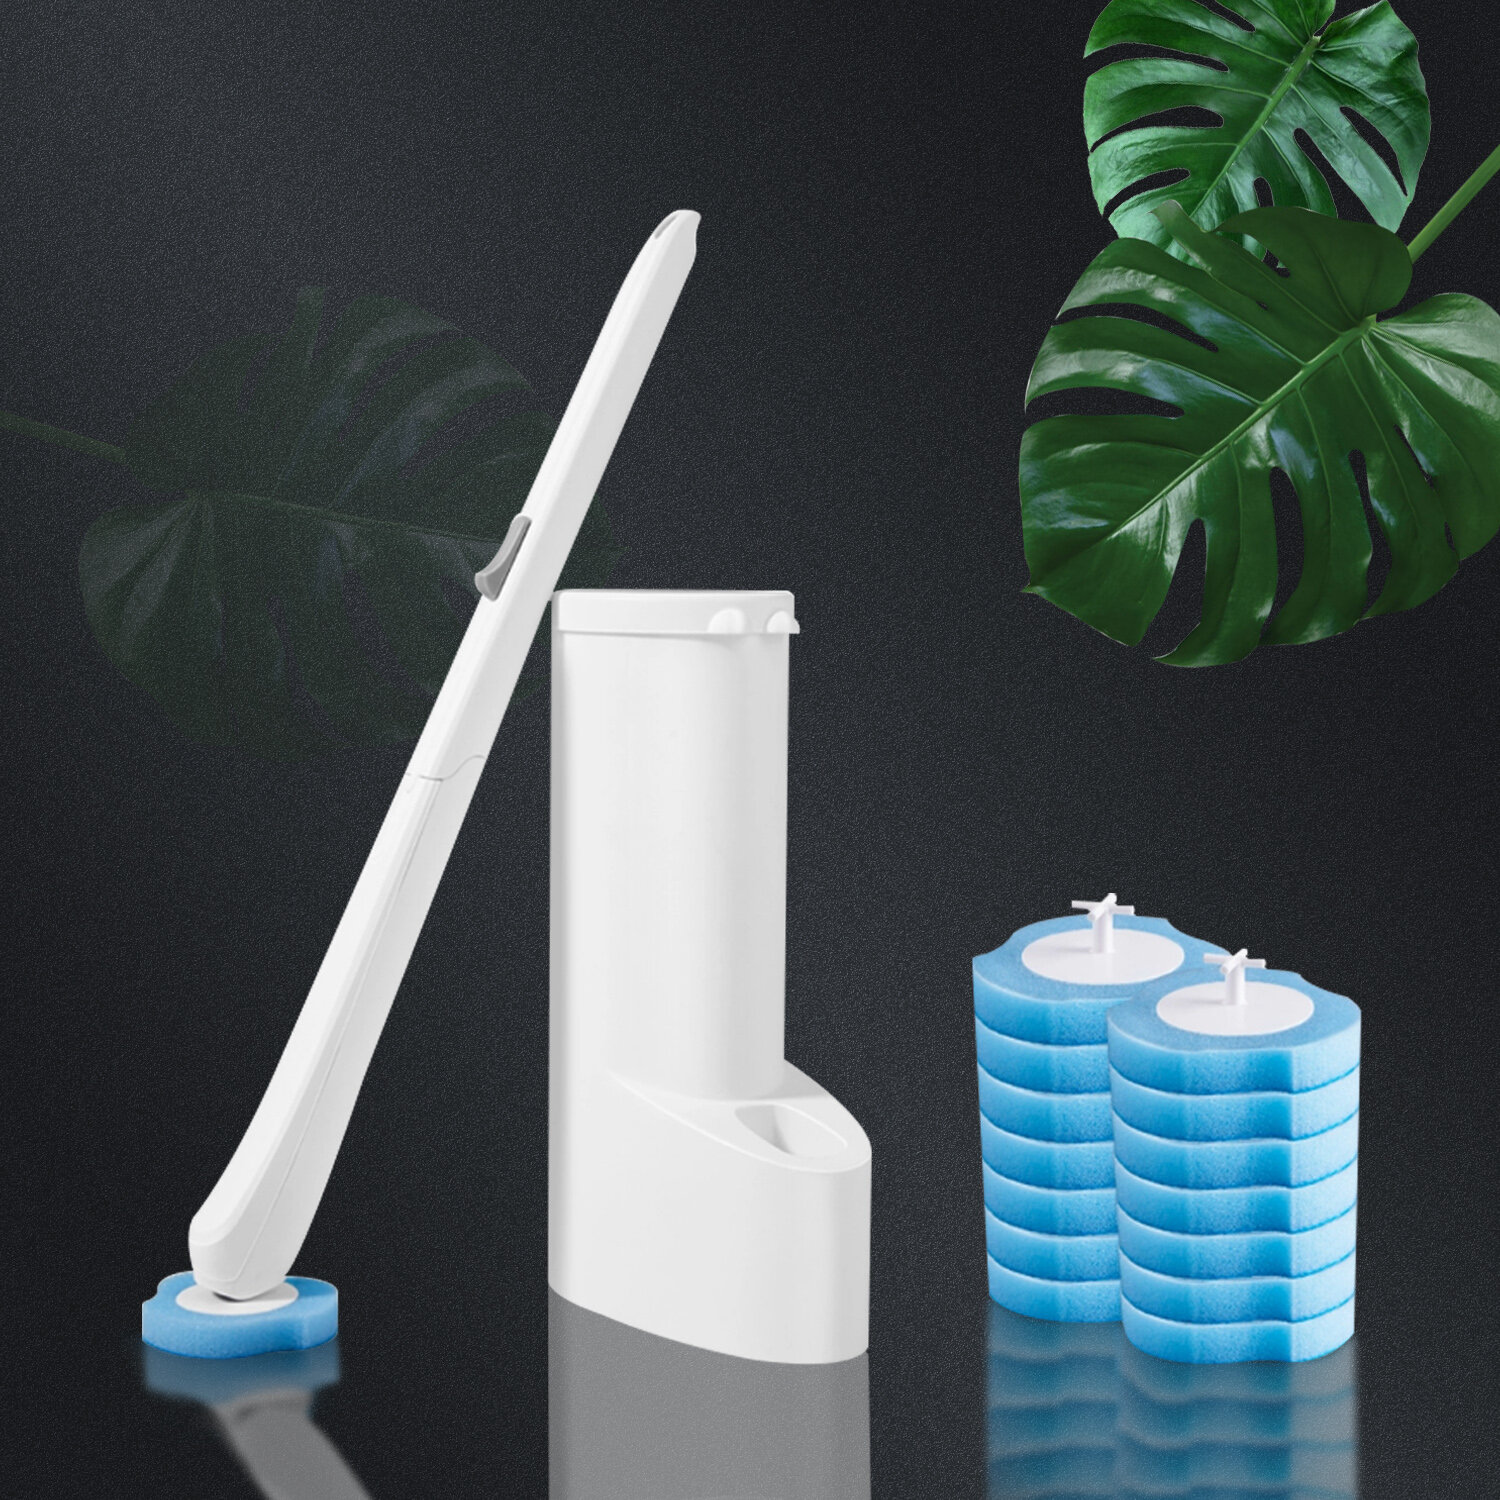 Glass Decorative Toilet Bowl Cleaner Brushes & Holder Set for Bathroom  Accessories Storage/Organization/Decoration- Dark Blue (Brush and Holder  only)